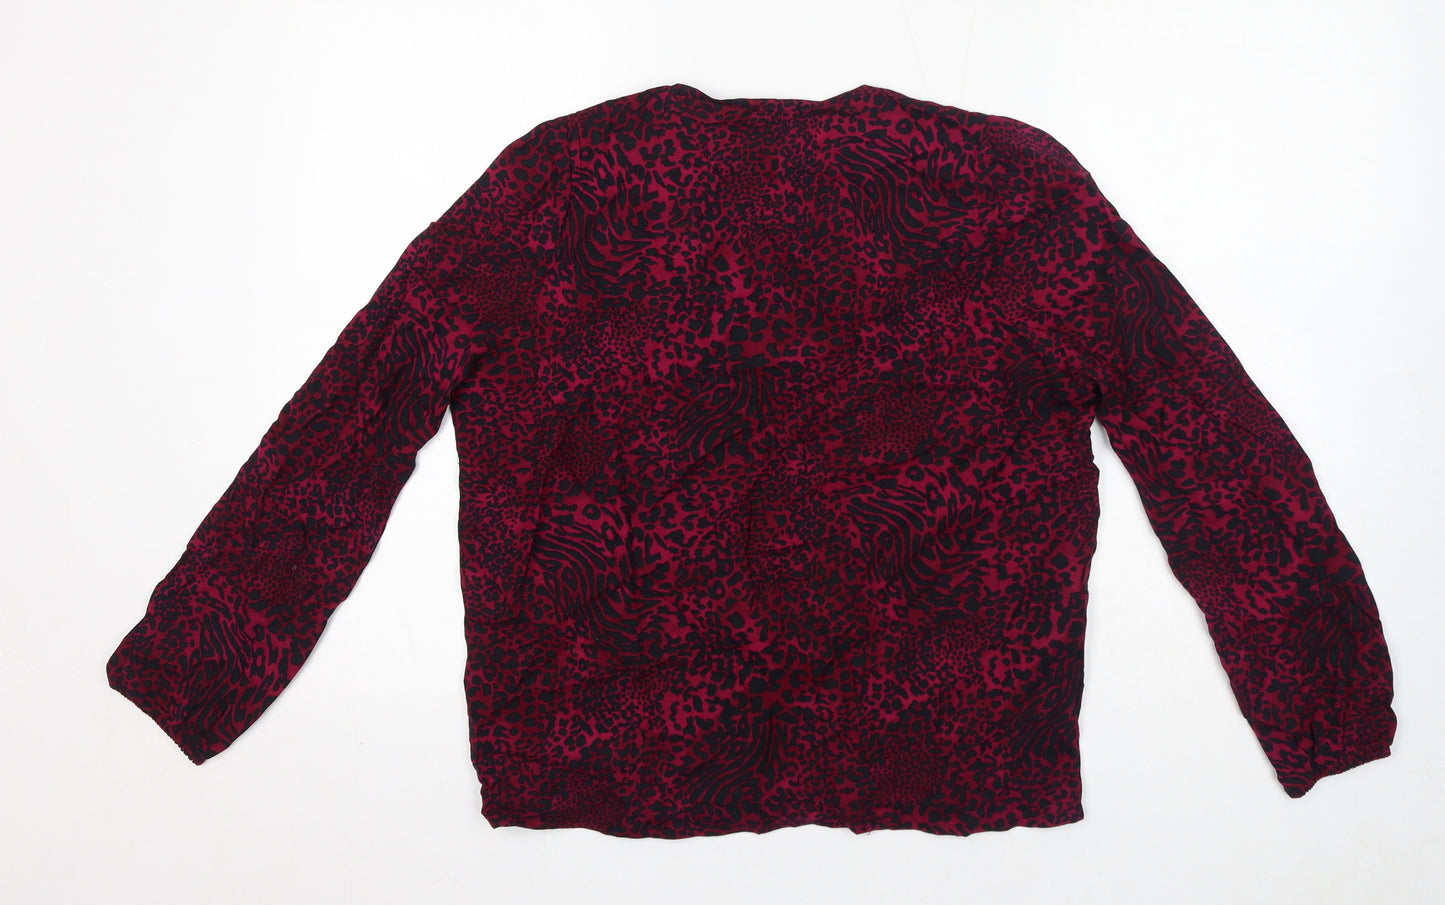 Dorothy Perkins Womens Pink Animal Print Viscose Basic Blouse Size 8 Round Neck - Leopard Print